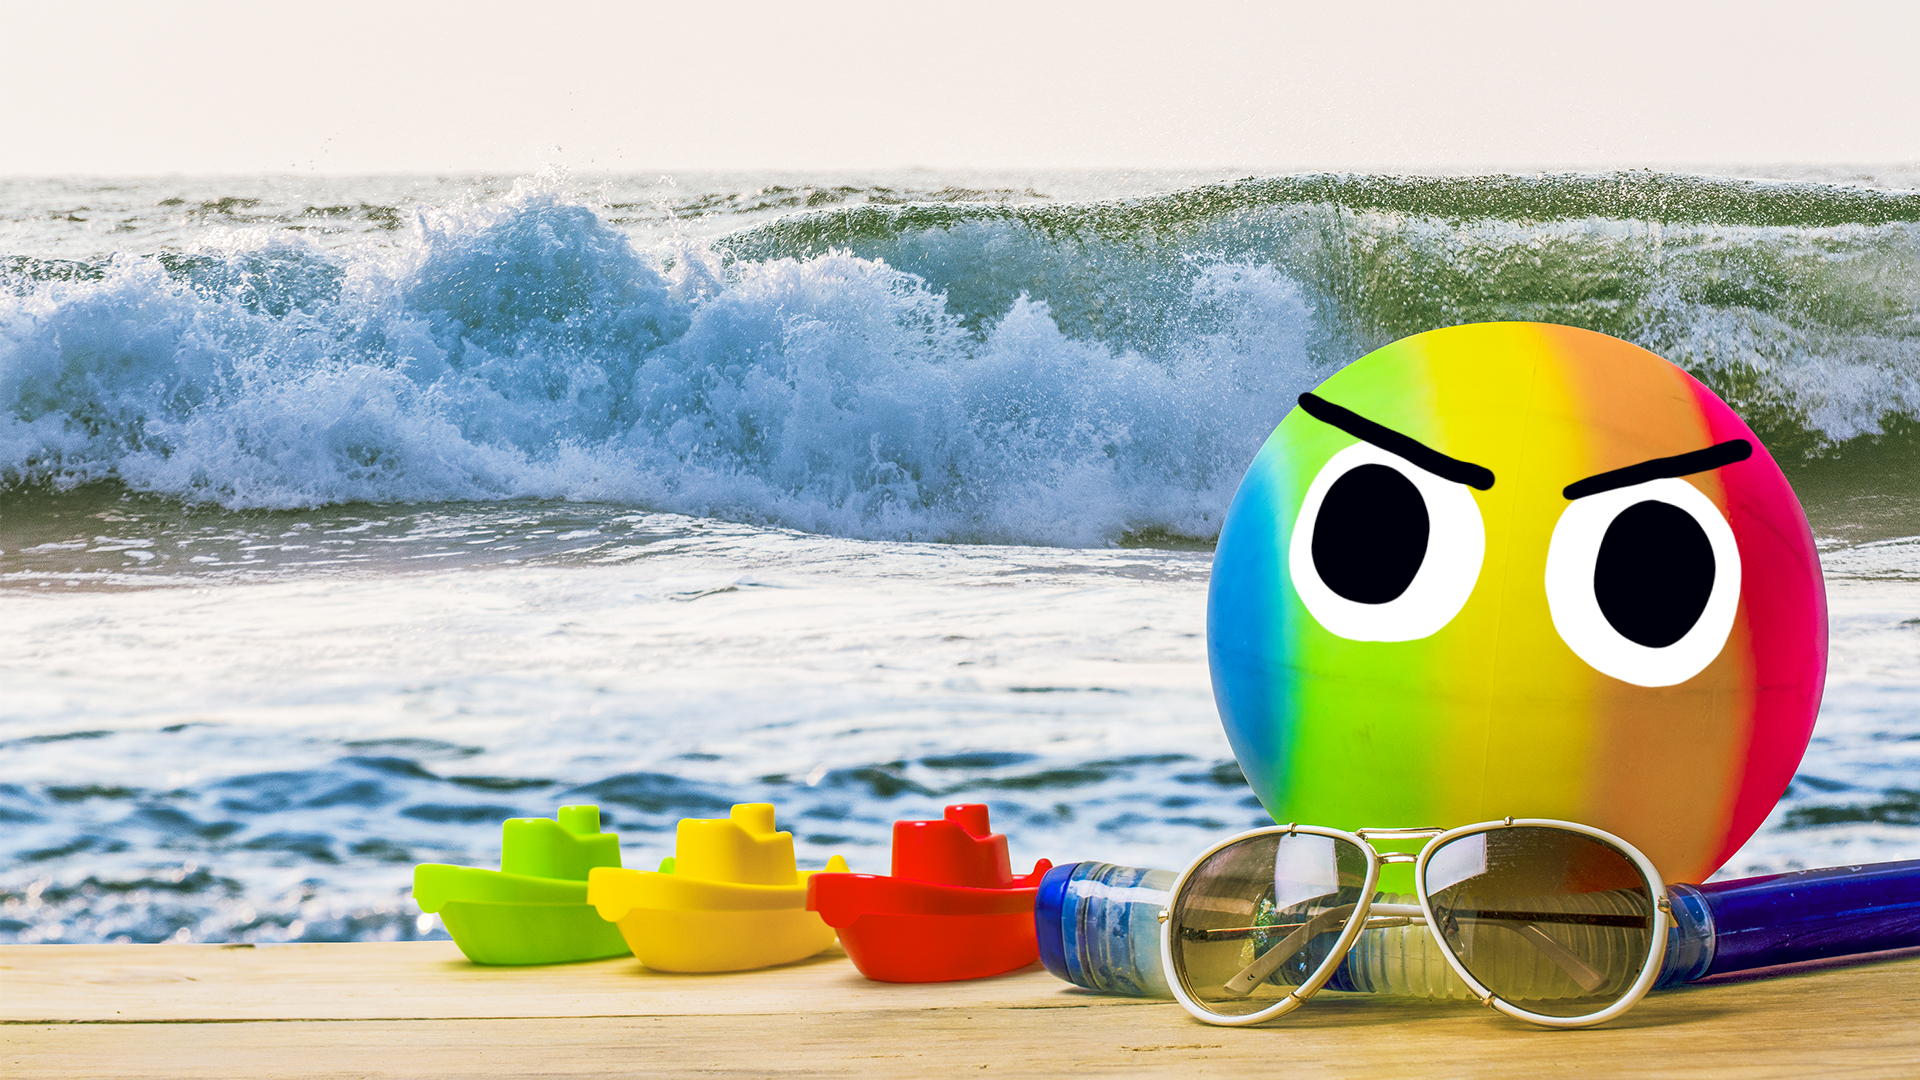 A beach ball and accessories on the beach